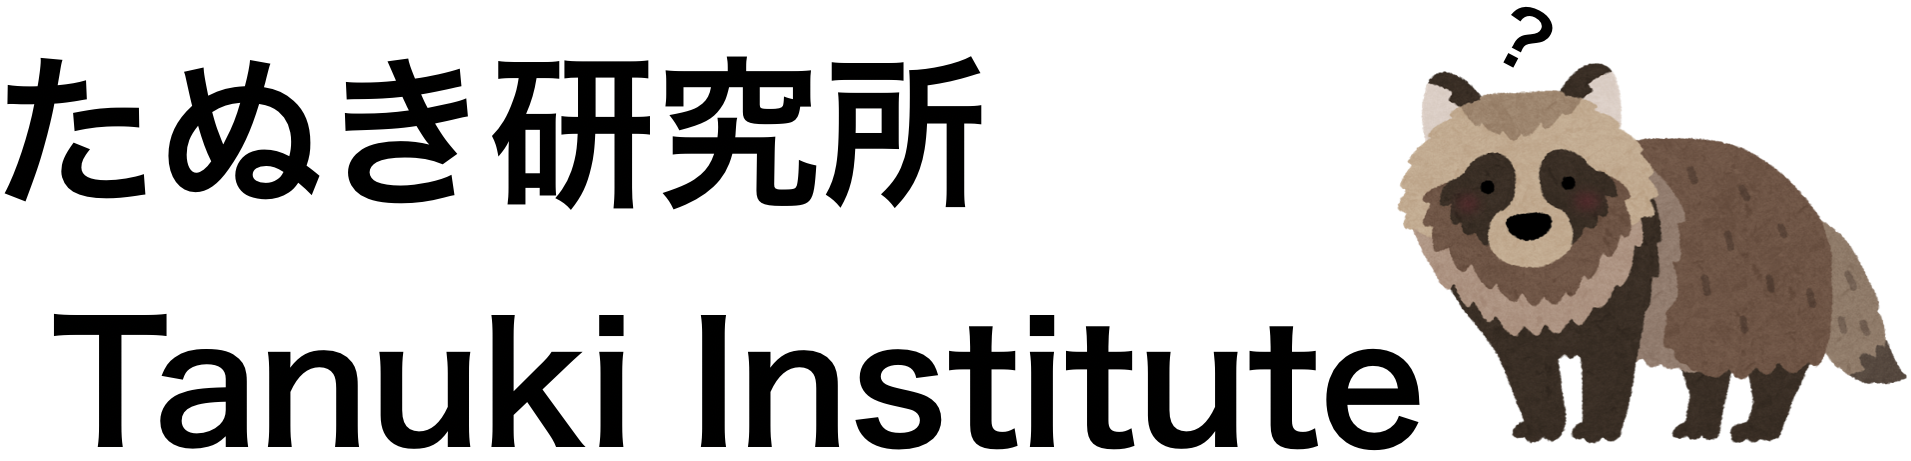 Tanuki Institute たぬき研究所